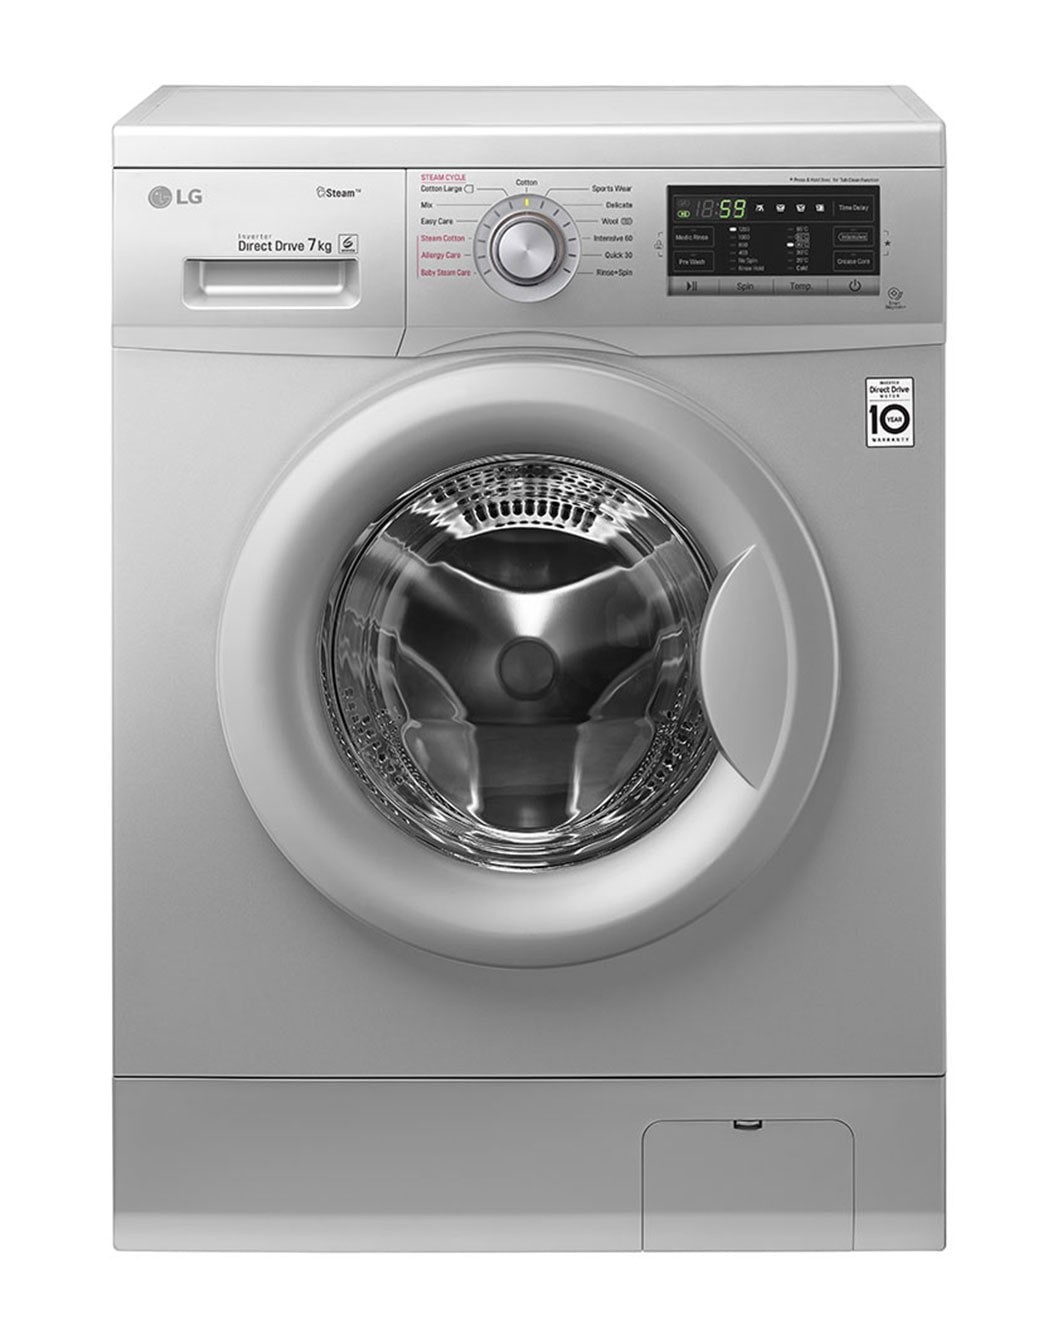 LG 7kg silver washing machine